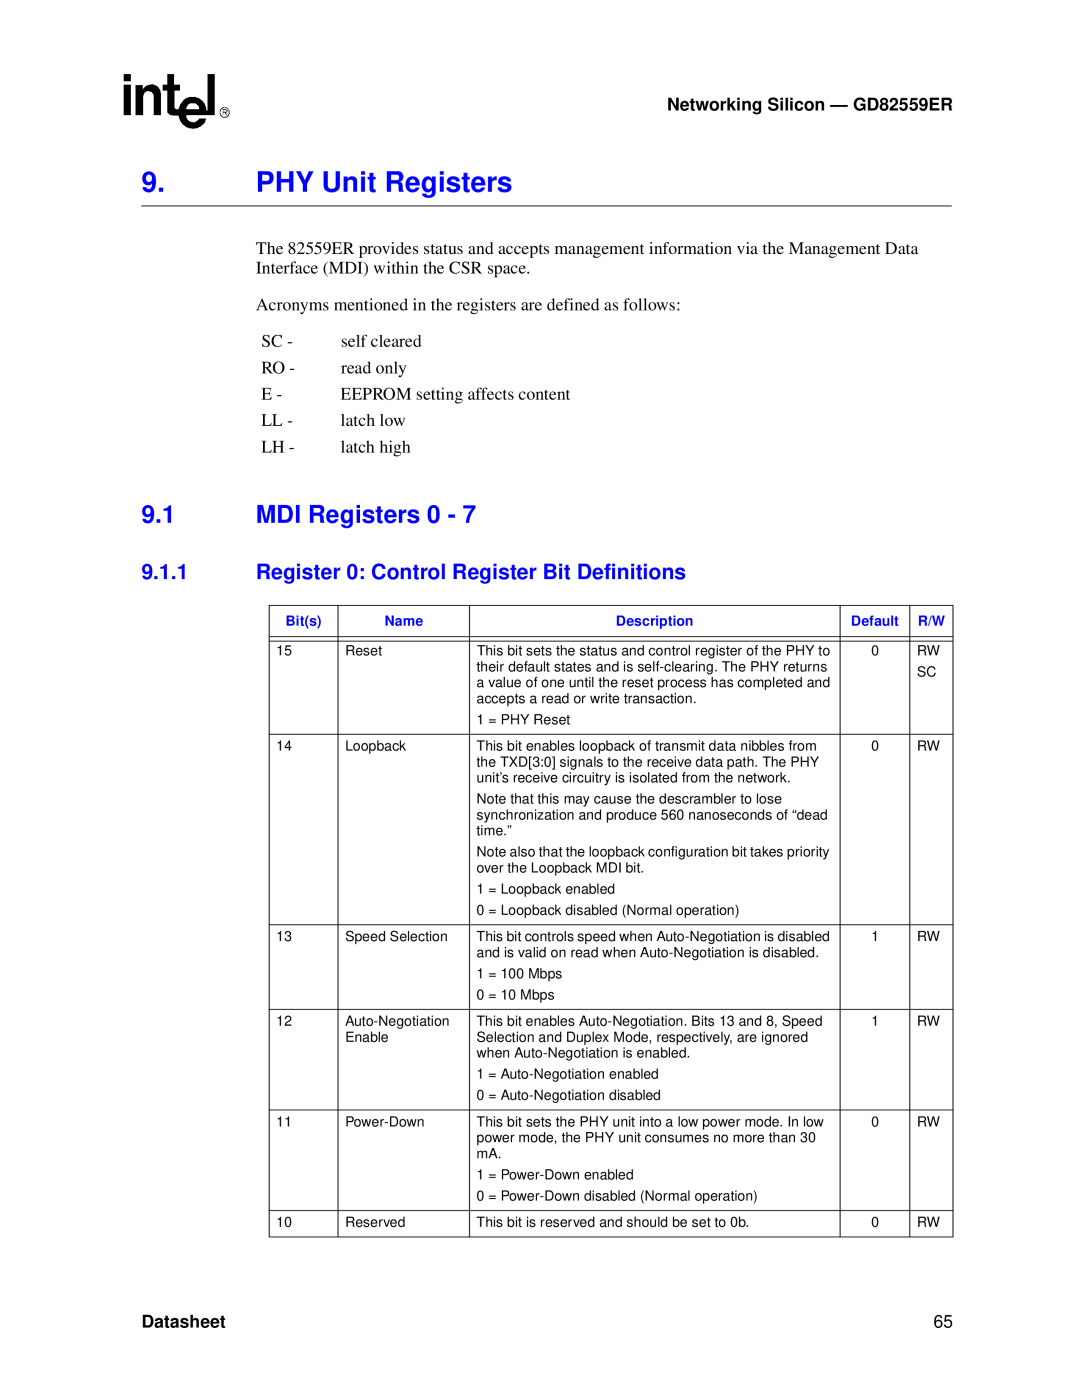 Intel GD82559ER manual PHY Unit Registers, MDI Registers 0, Register 0 Control Register Bit Definitions, Datasheet 